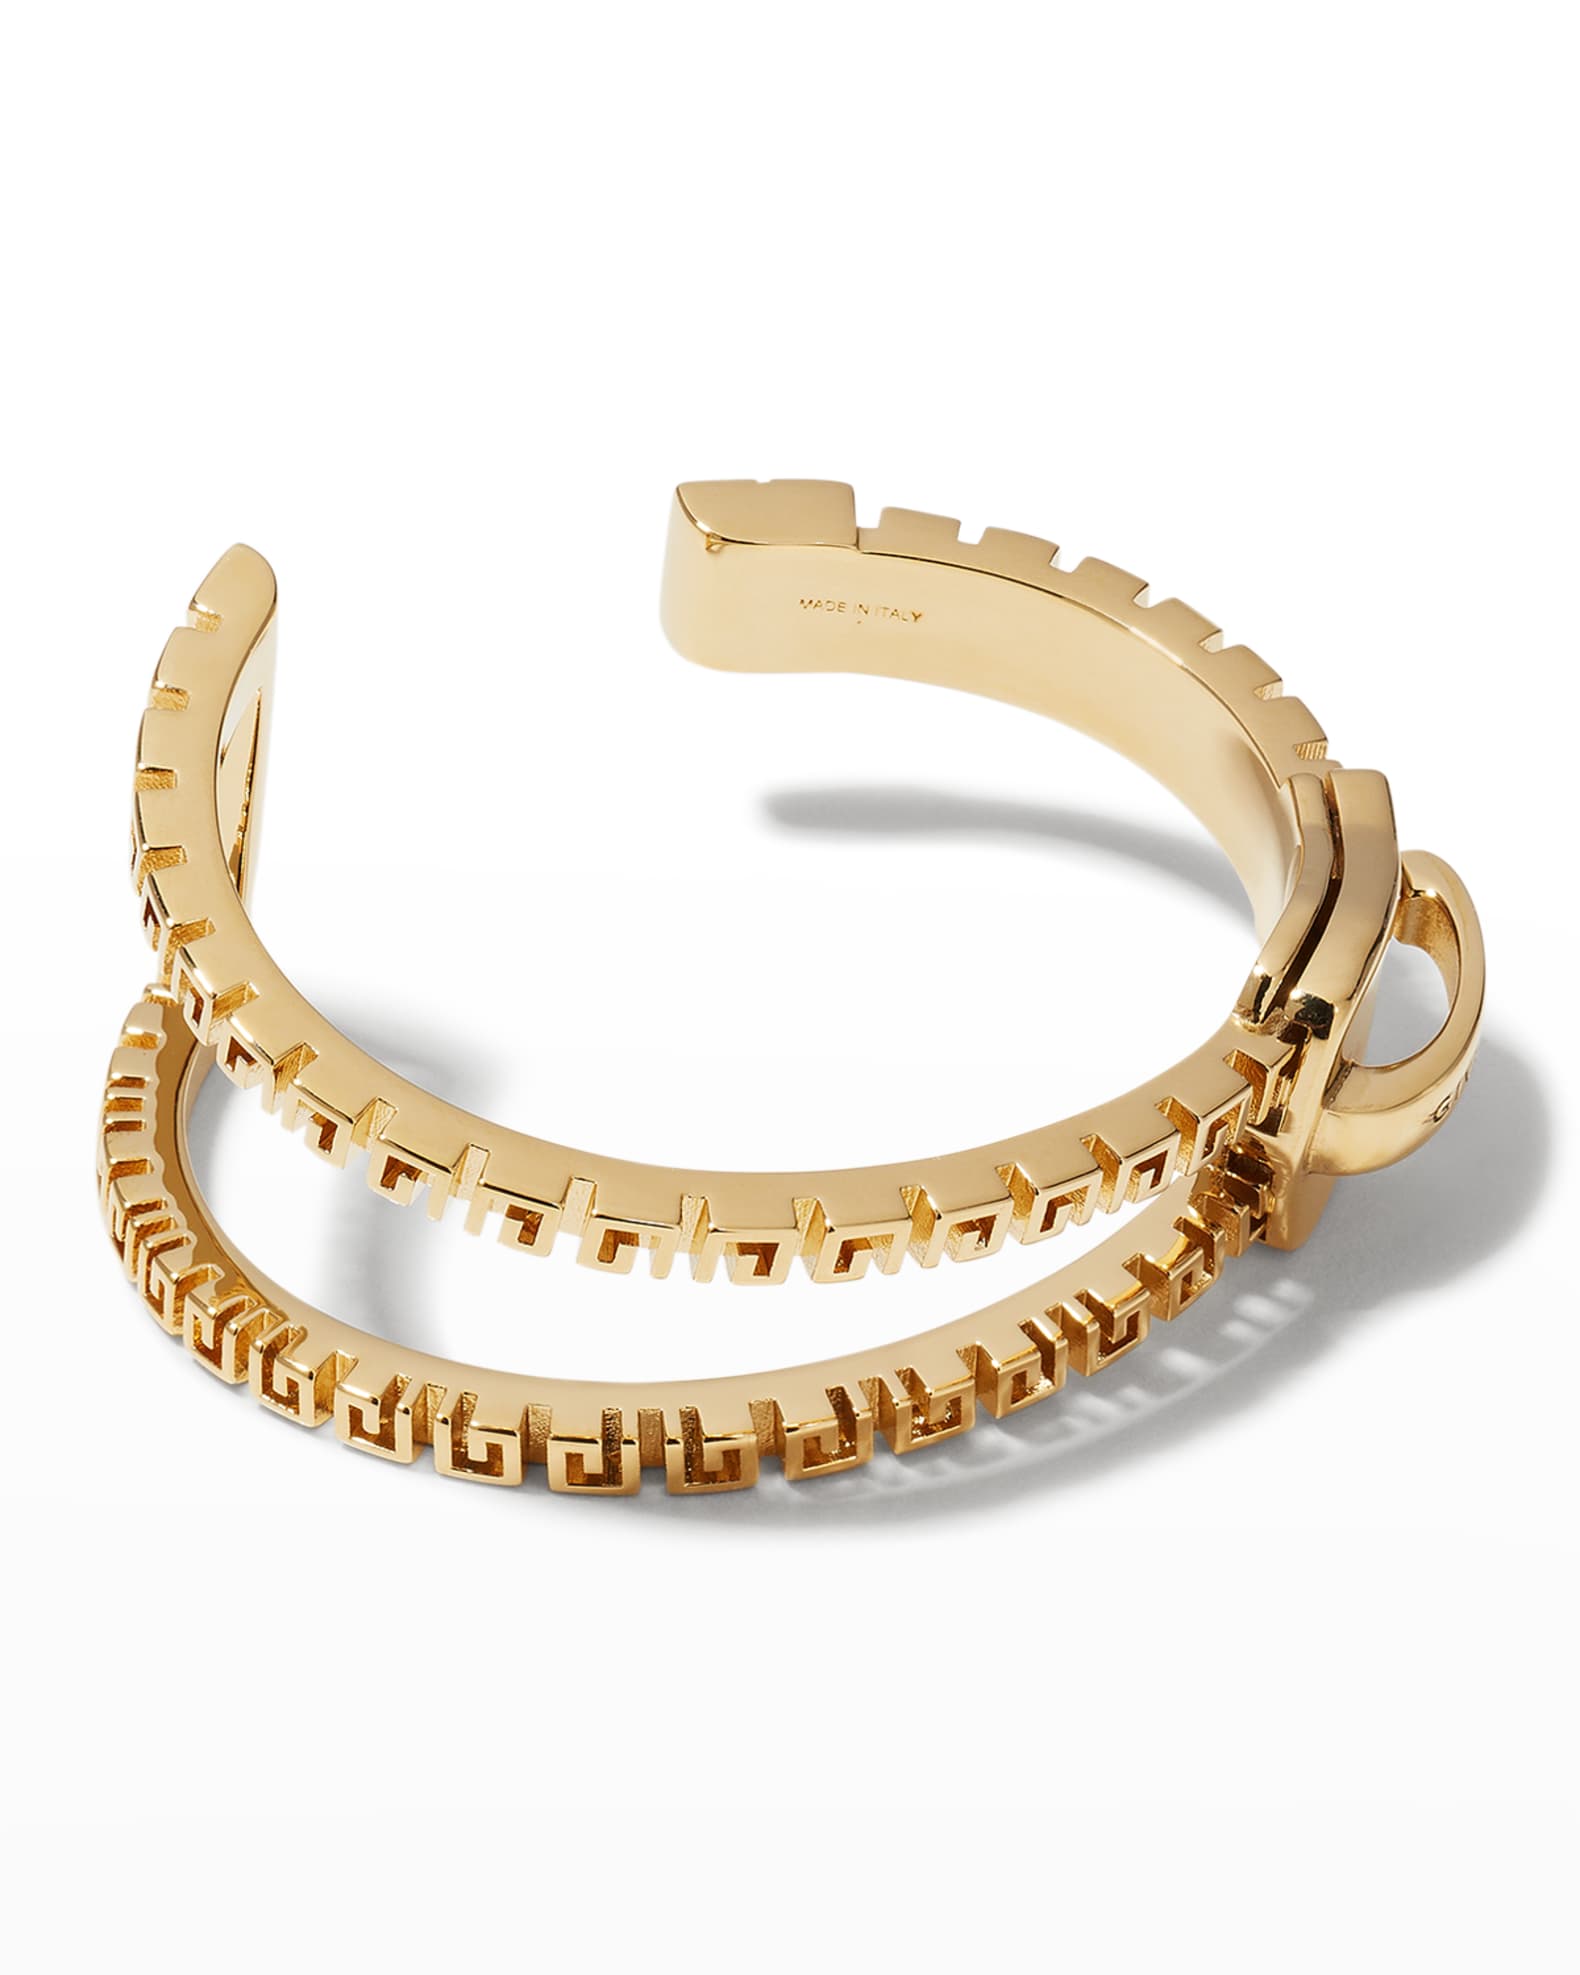 Givenchy G-Zip Cuff Bracelet | Neiman Marcus